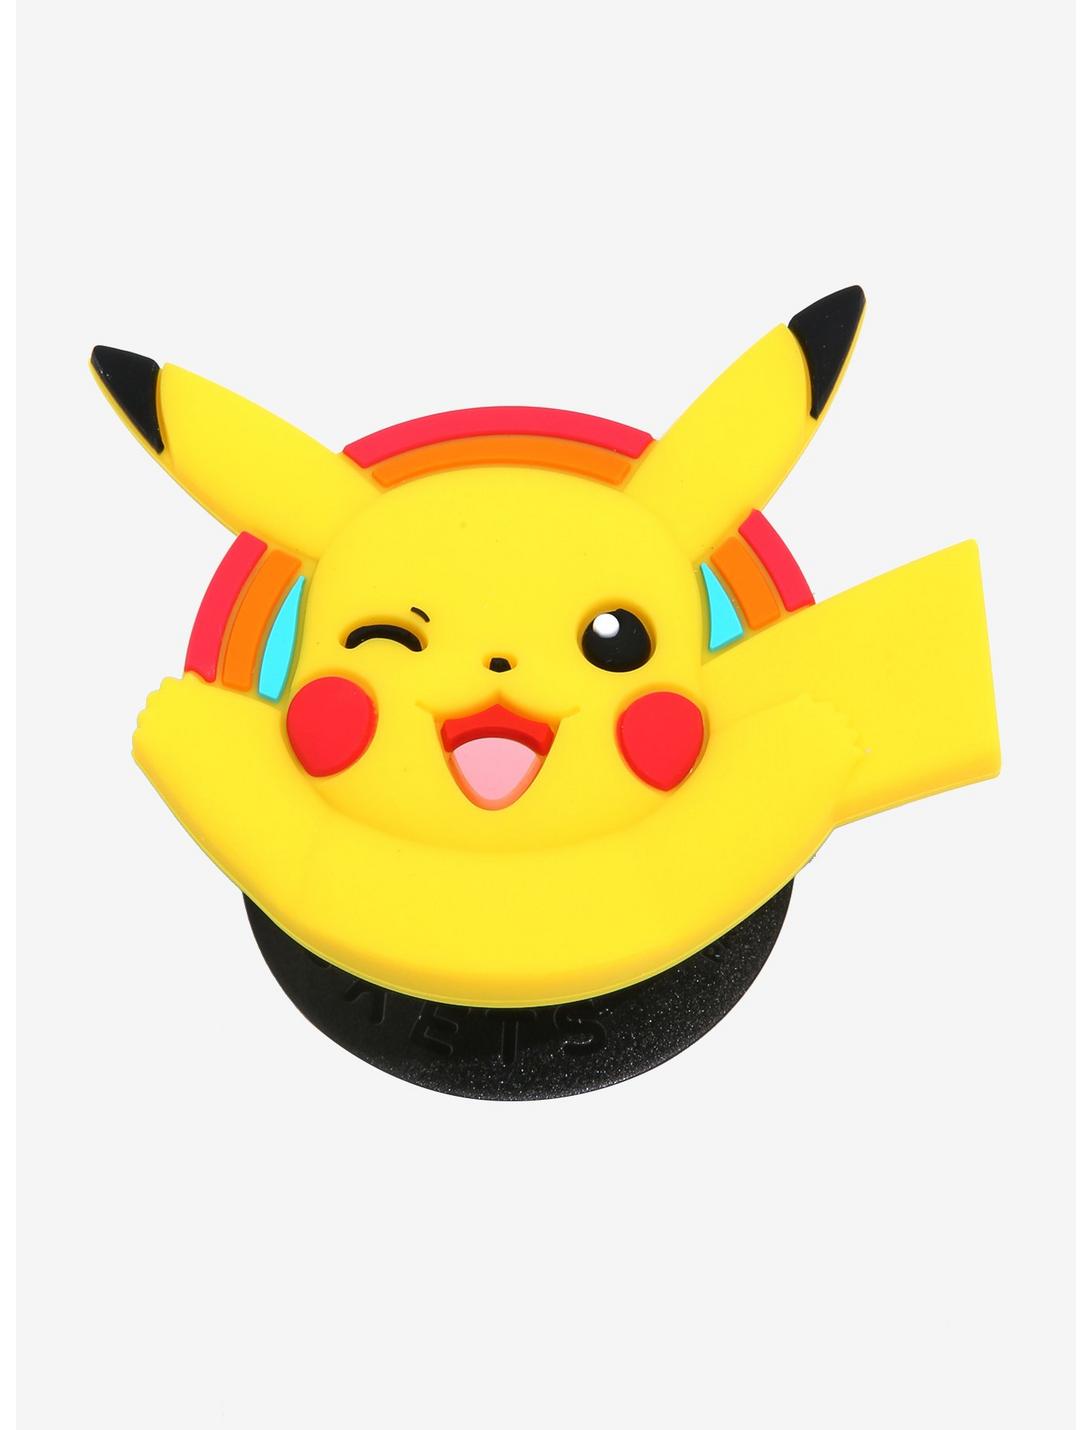 Pokémon Pikachu PopSocket PopGrip, , hi-res